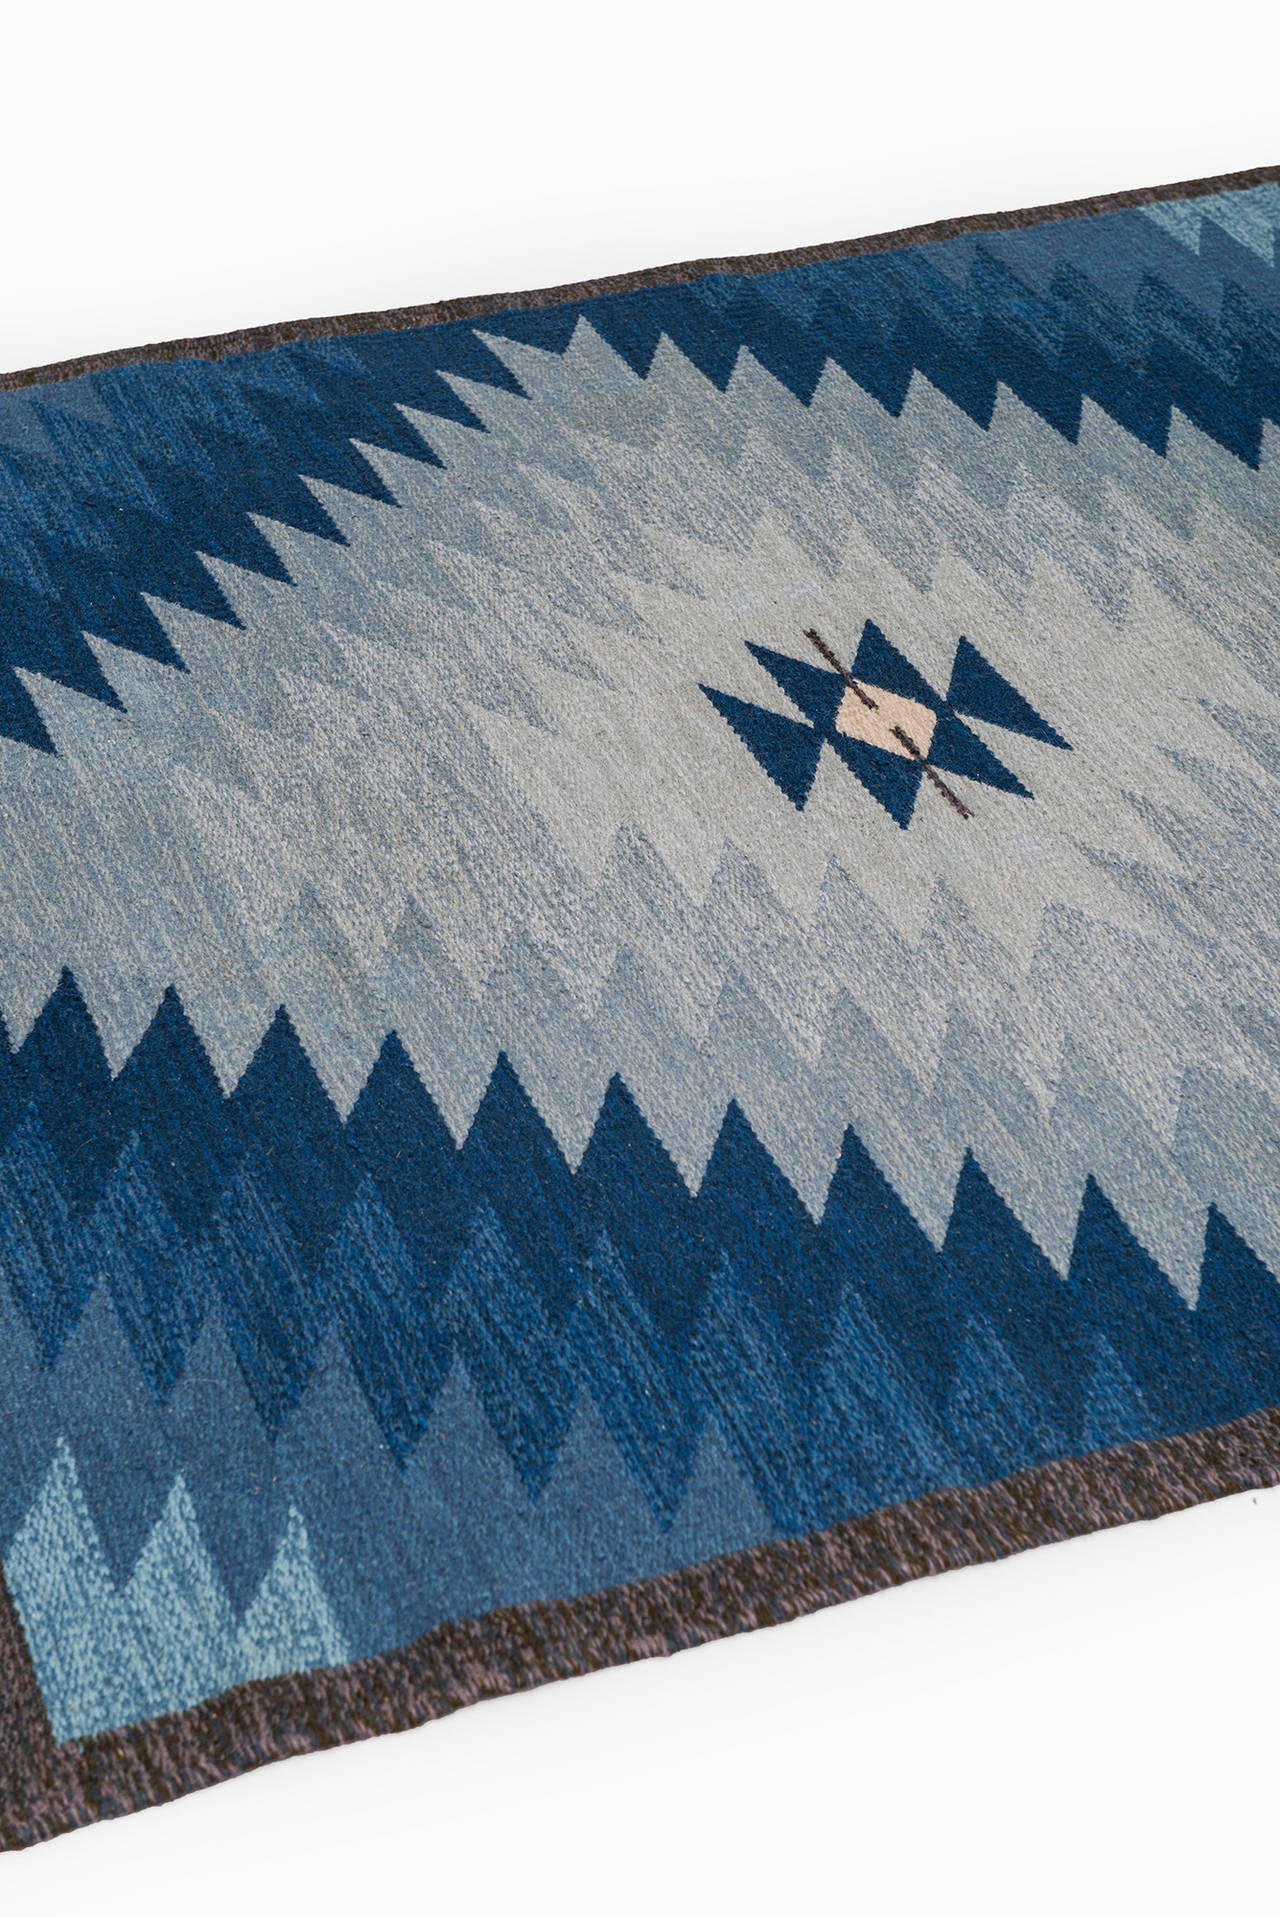 Mid-20th Century Rare Röllakan Carpet by Unknown Designer